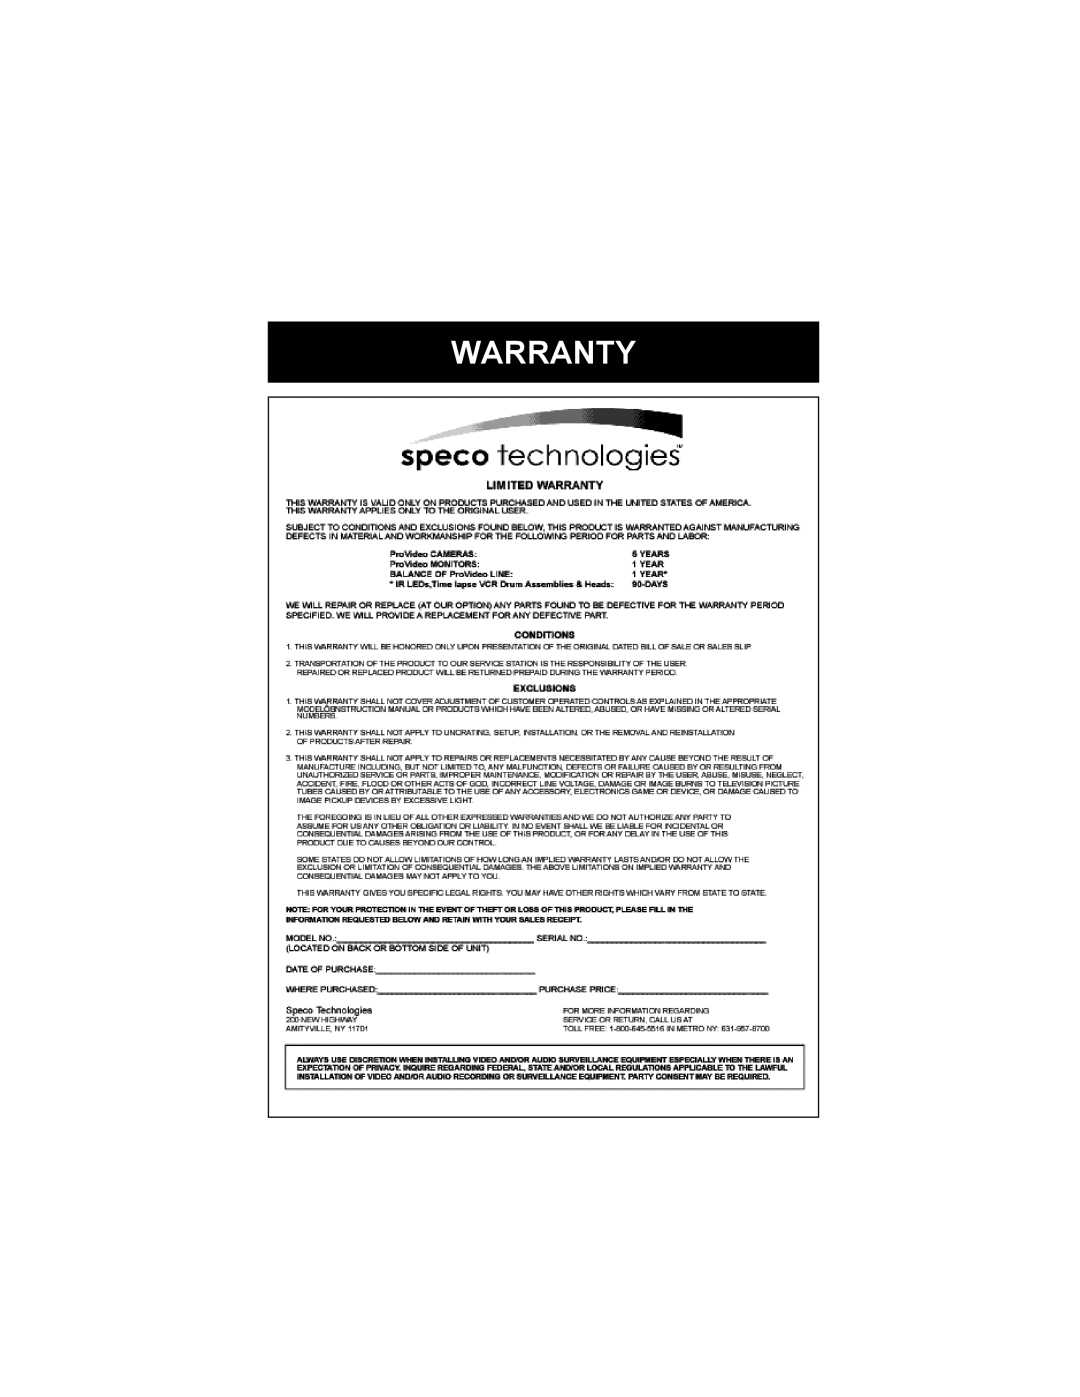 Speco Technologies WDR-R3 manual Warranty 